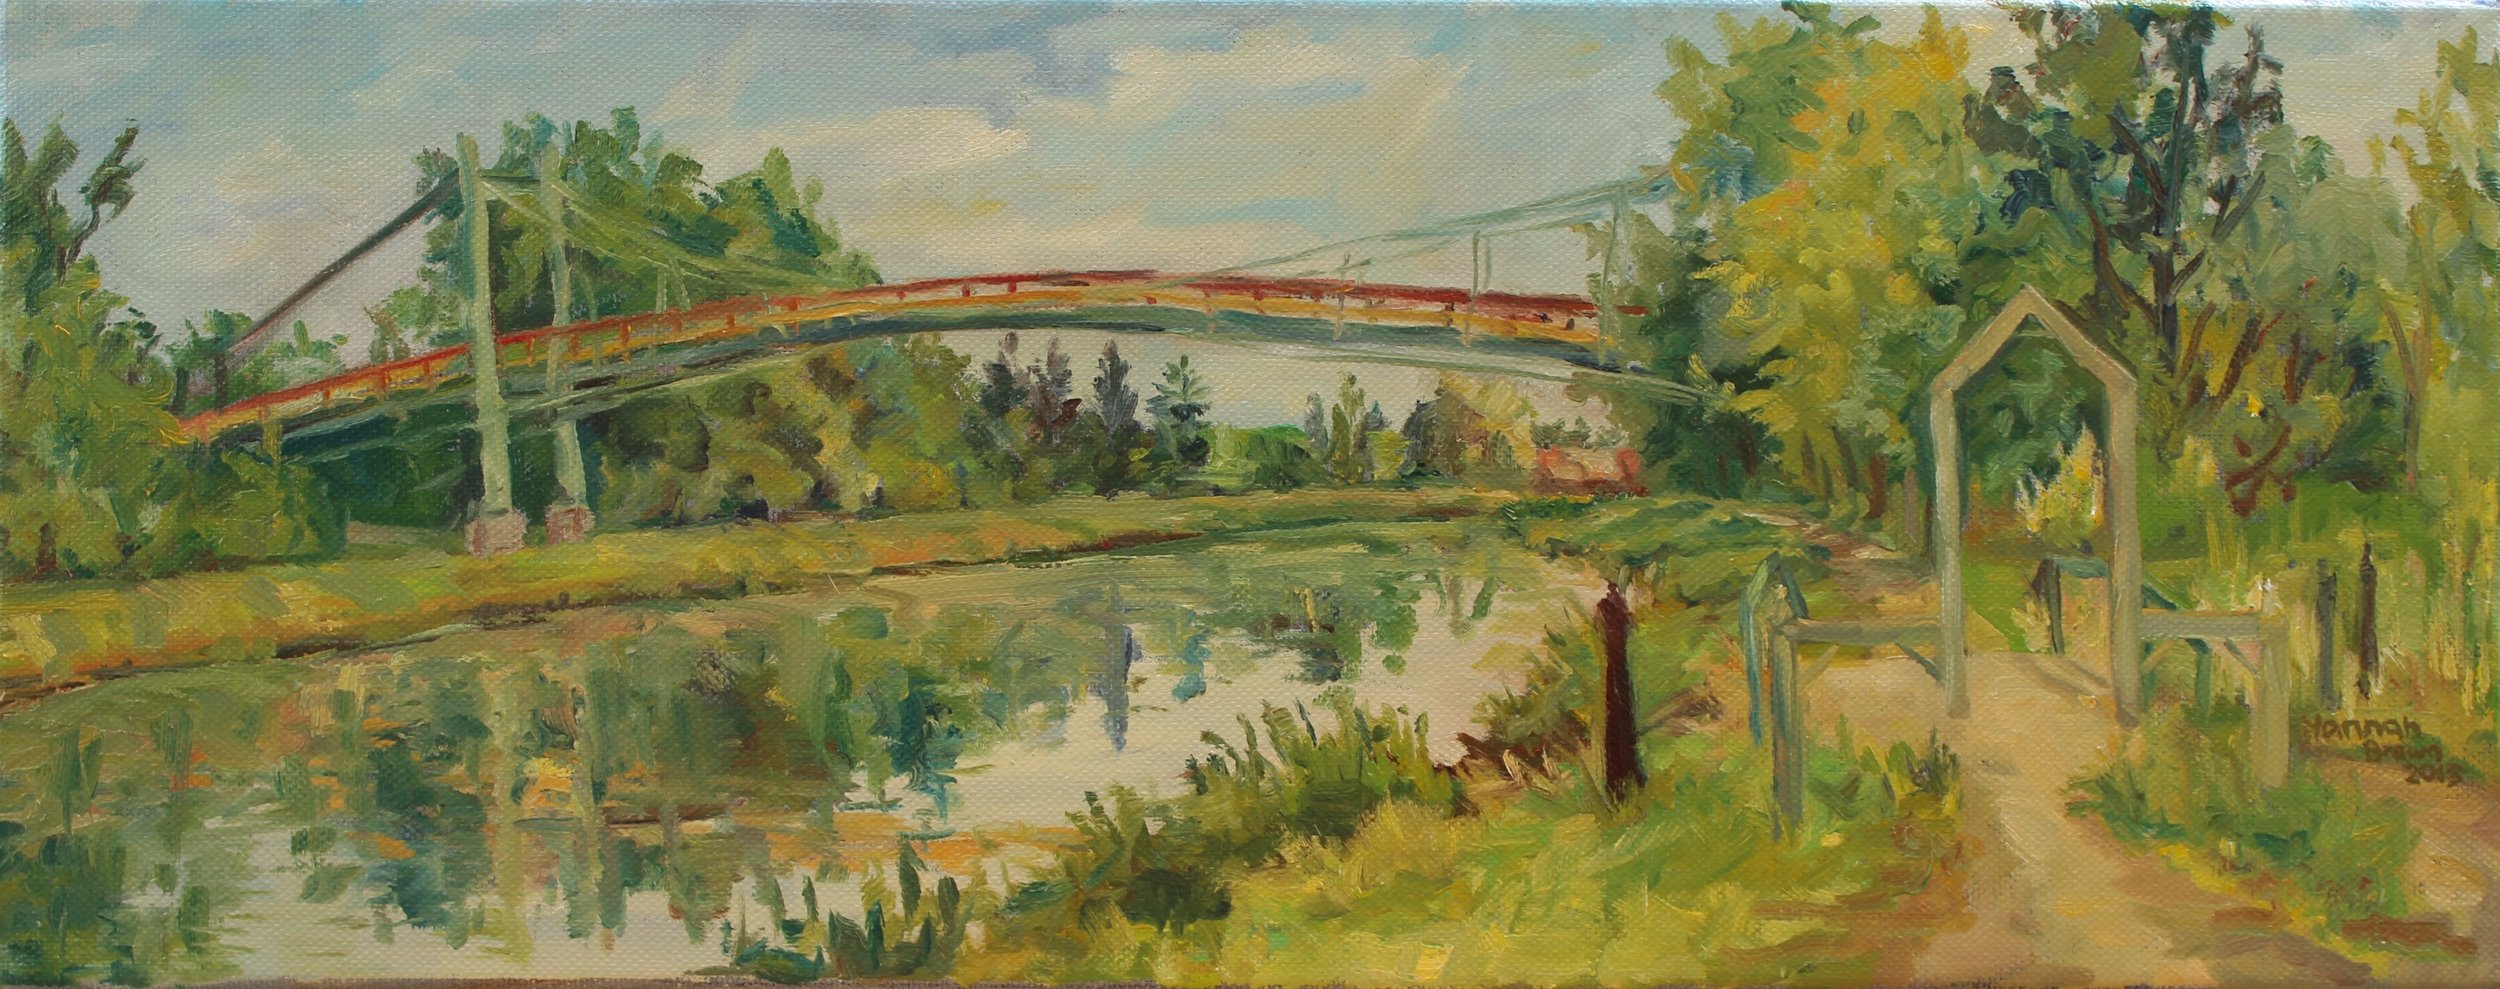 4) Toušeňská lávka - The Toušeň Bridge - 50x20.jpg